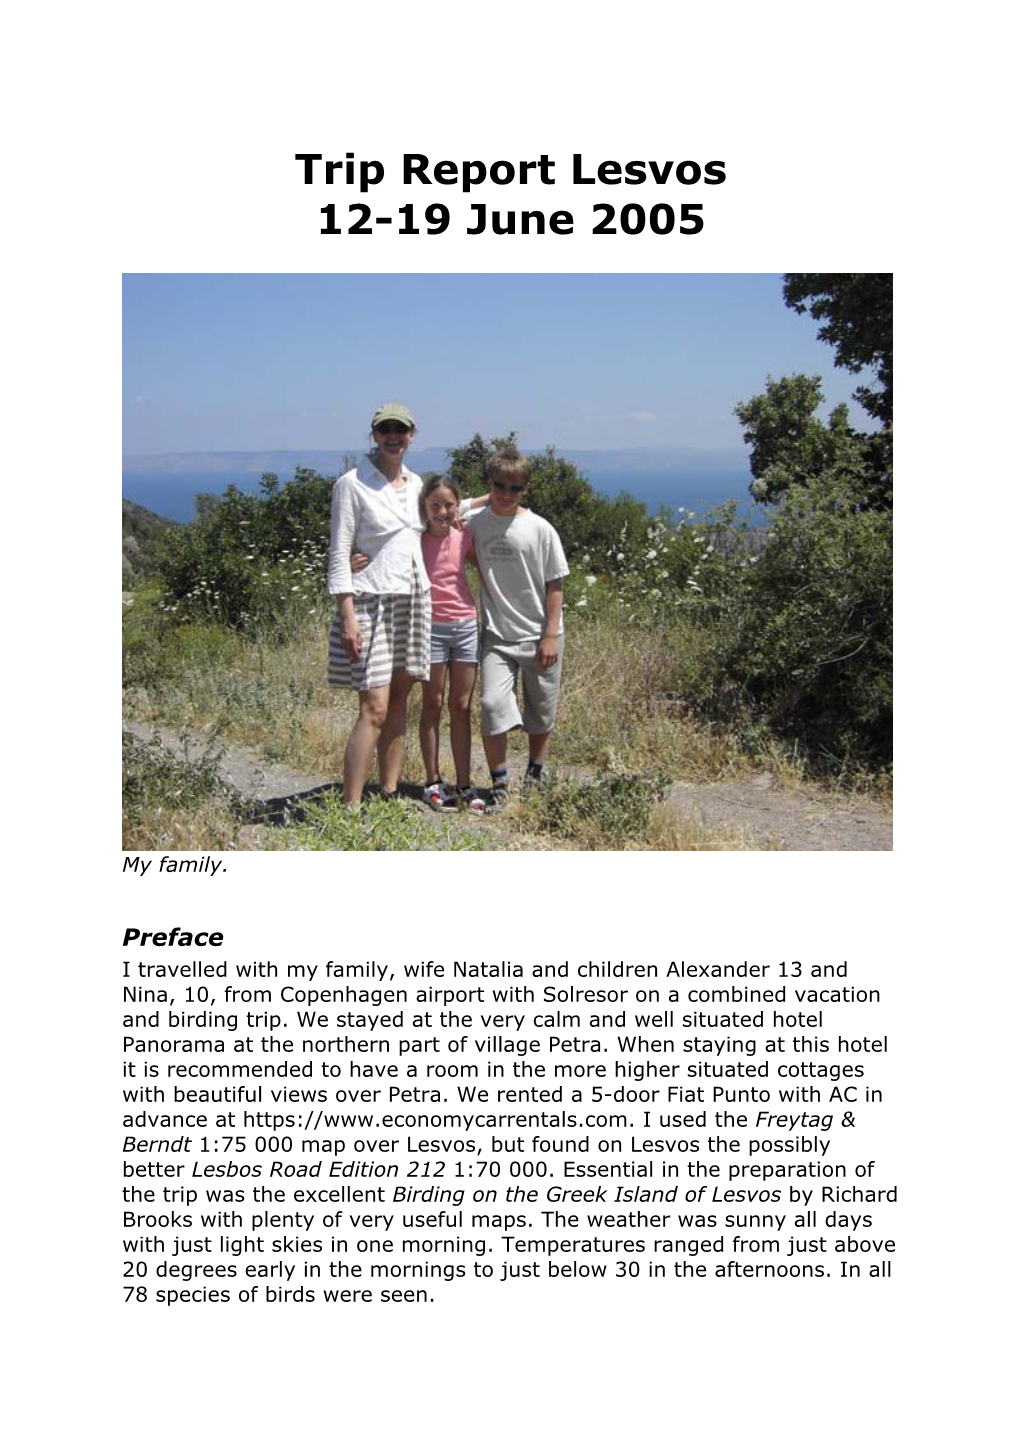 Trip Report Lesvos 12-19 June 2005